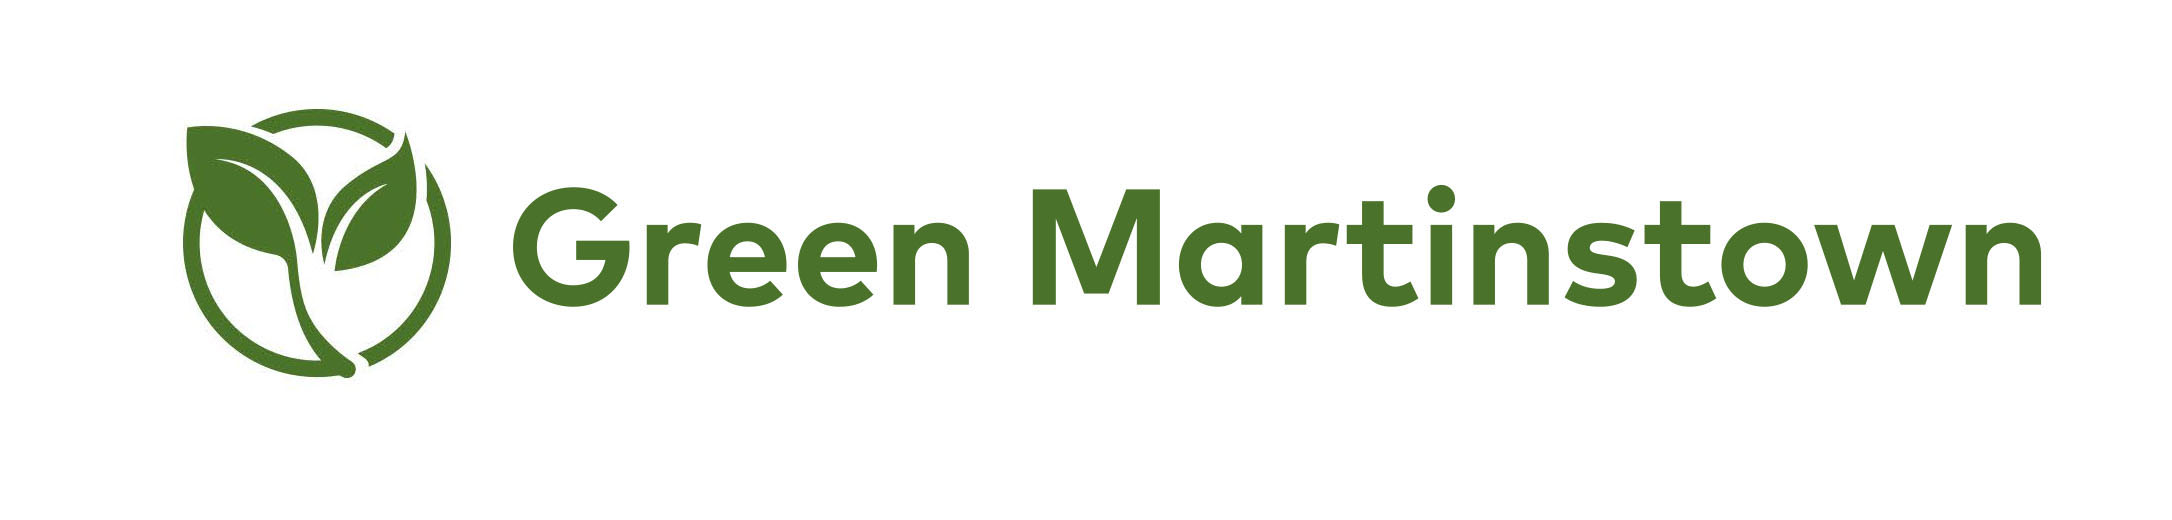 Green Martinstown Community Interest Company logo